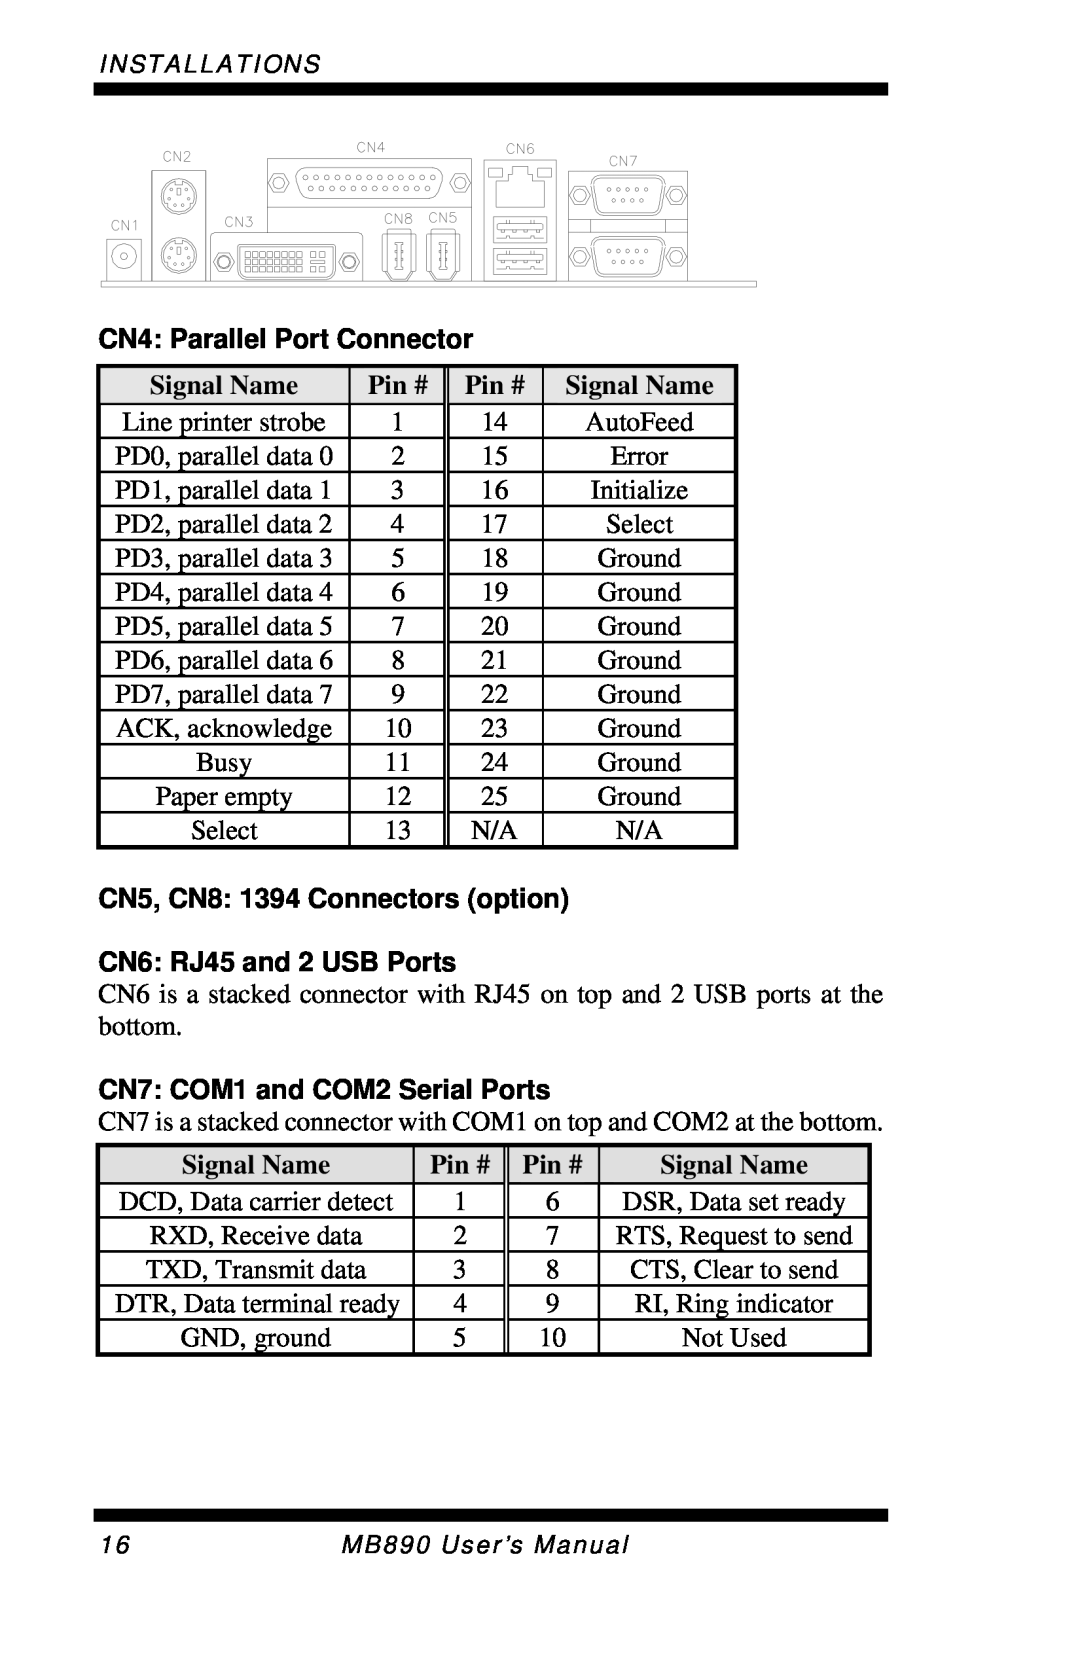 Intel MB890 user manual CN4 Parallel Port Connector, CN5, CN8 1394 Connectors option, CN6 RJ45 and 2 USB Ports 